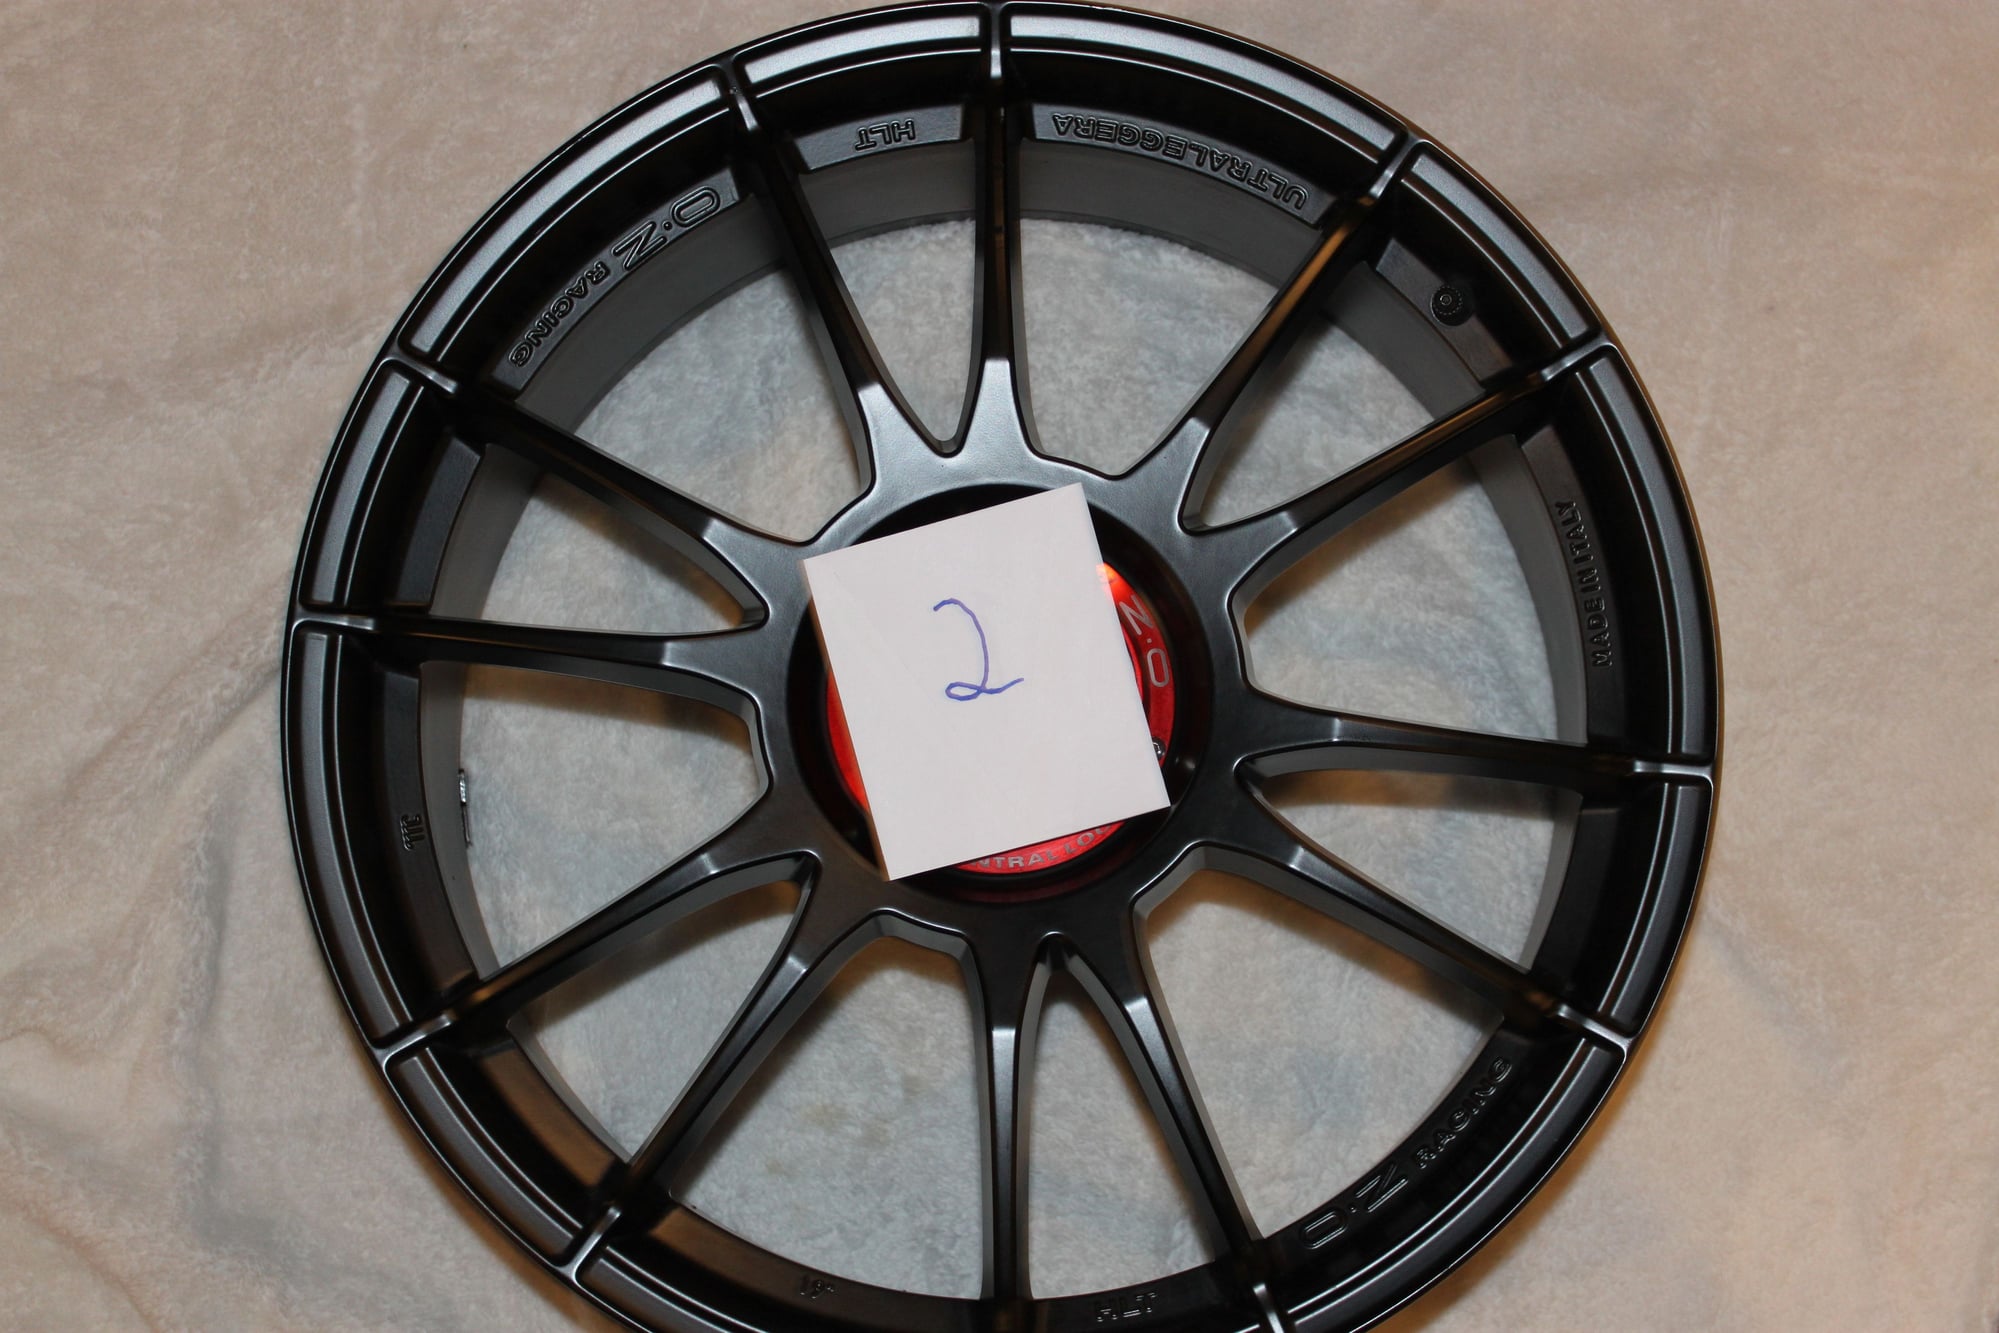 Wheels and Tires/Axles - Set of 4 OZ Racing Ultraleggera 19" Centerlock 997.2 Wheels - Used - 2007 to 2011 Porsche GT3 - Clarendon Hills, IL 60514, United States